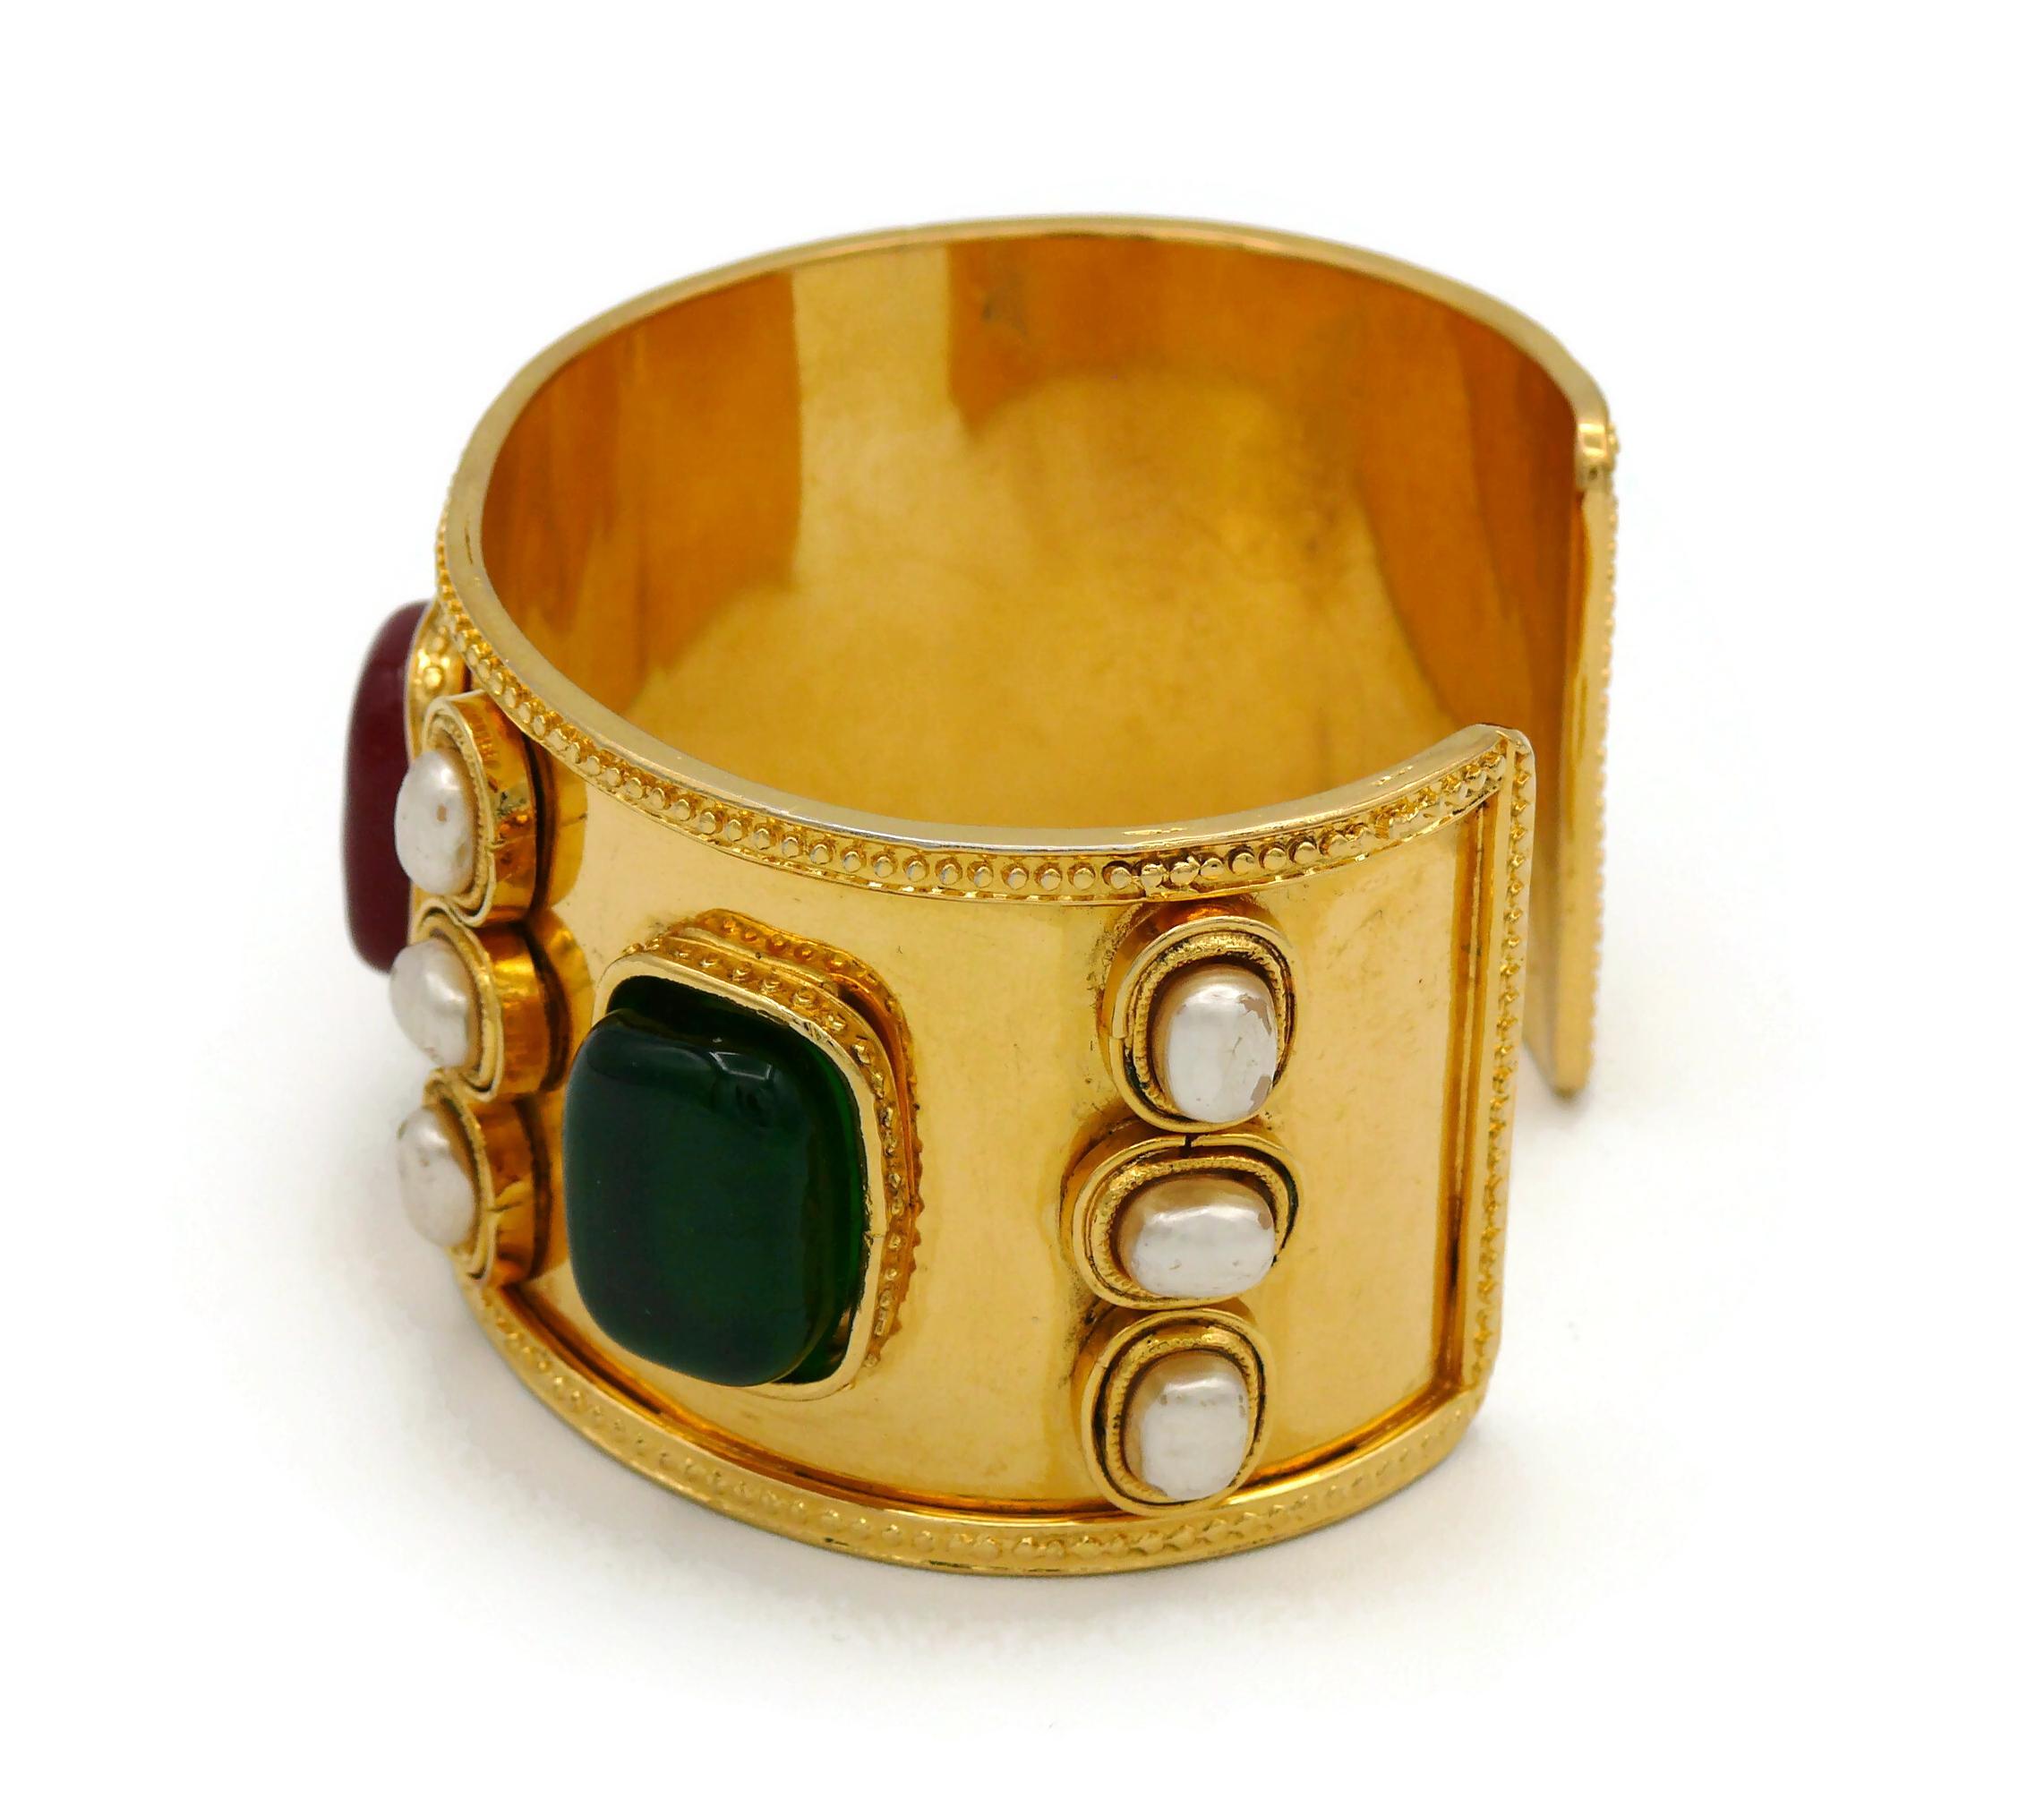 CHANEL Vintage Byzantine Inspired Gripoix Cuff Bracelet, 1990 For Sale 4